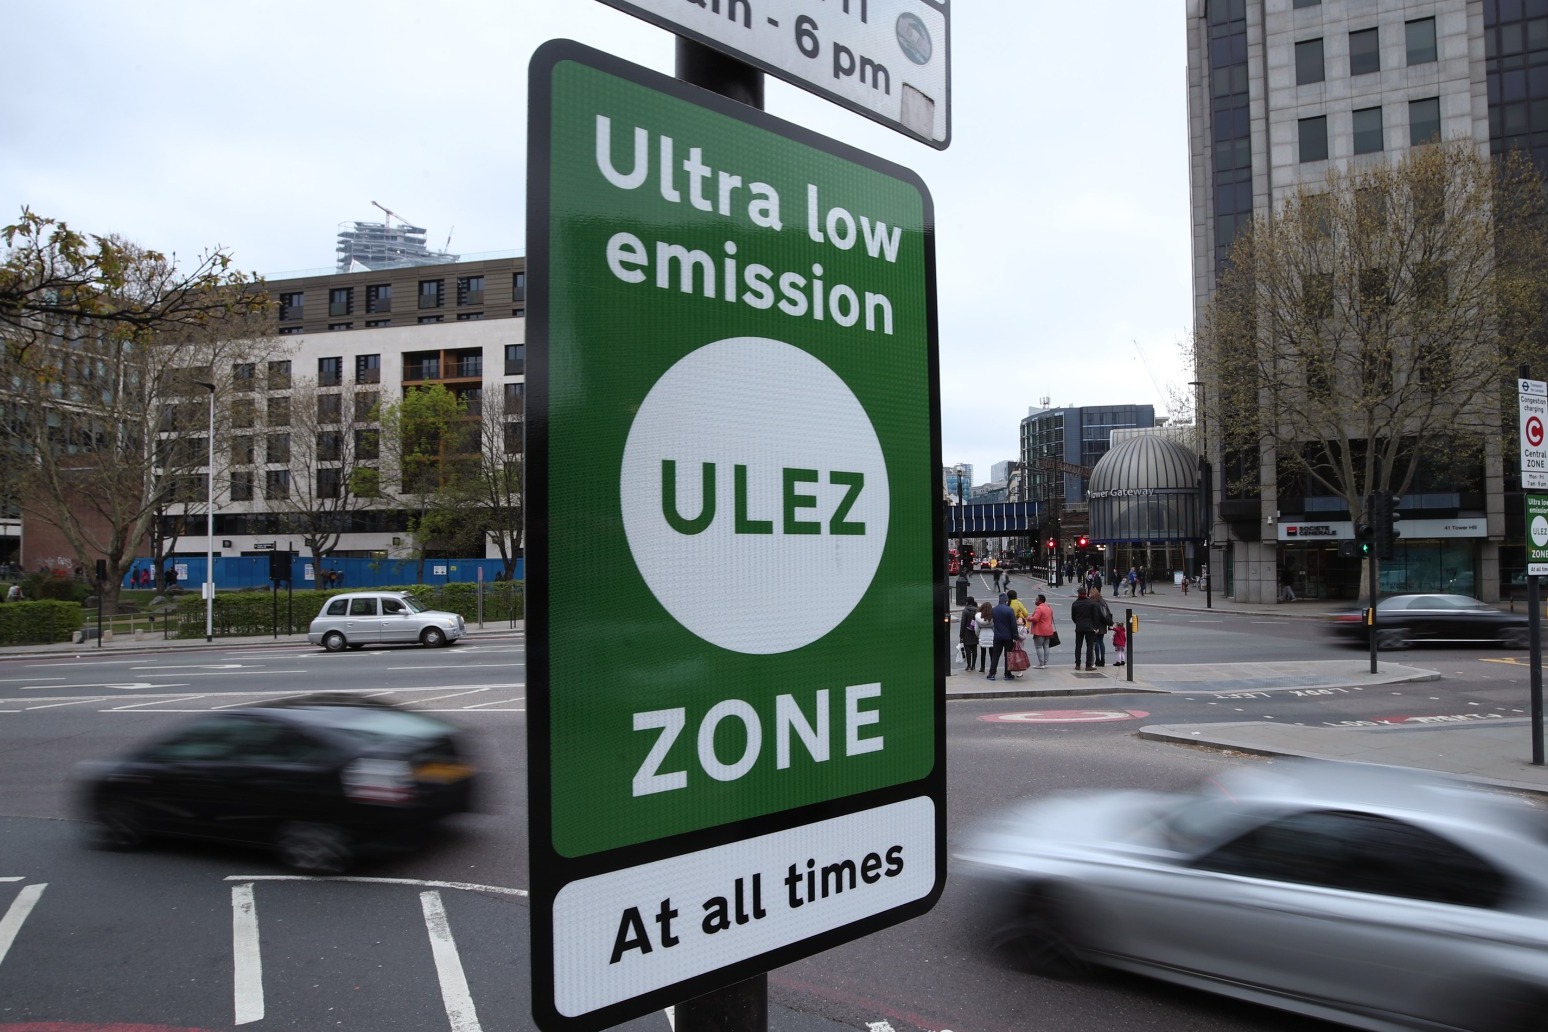 Sadiq Khan to expand ultra low emission zone to whole of London